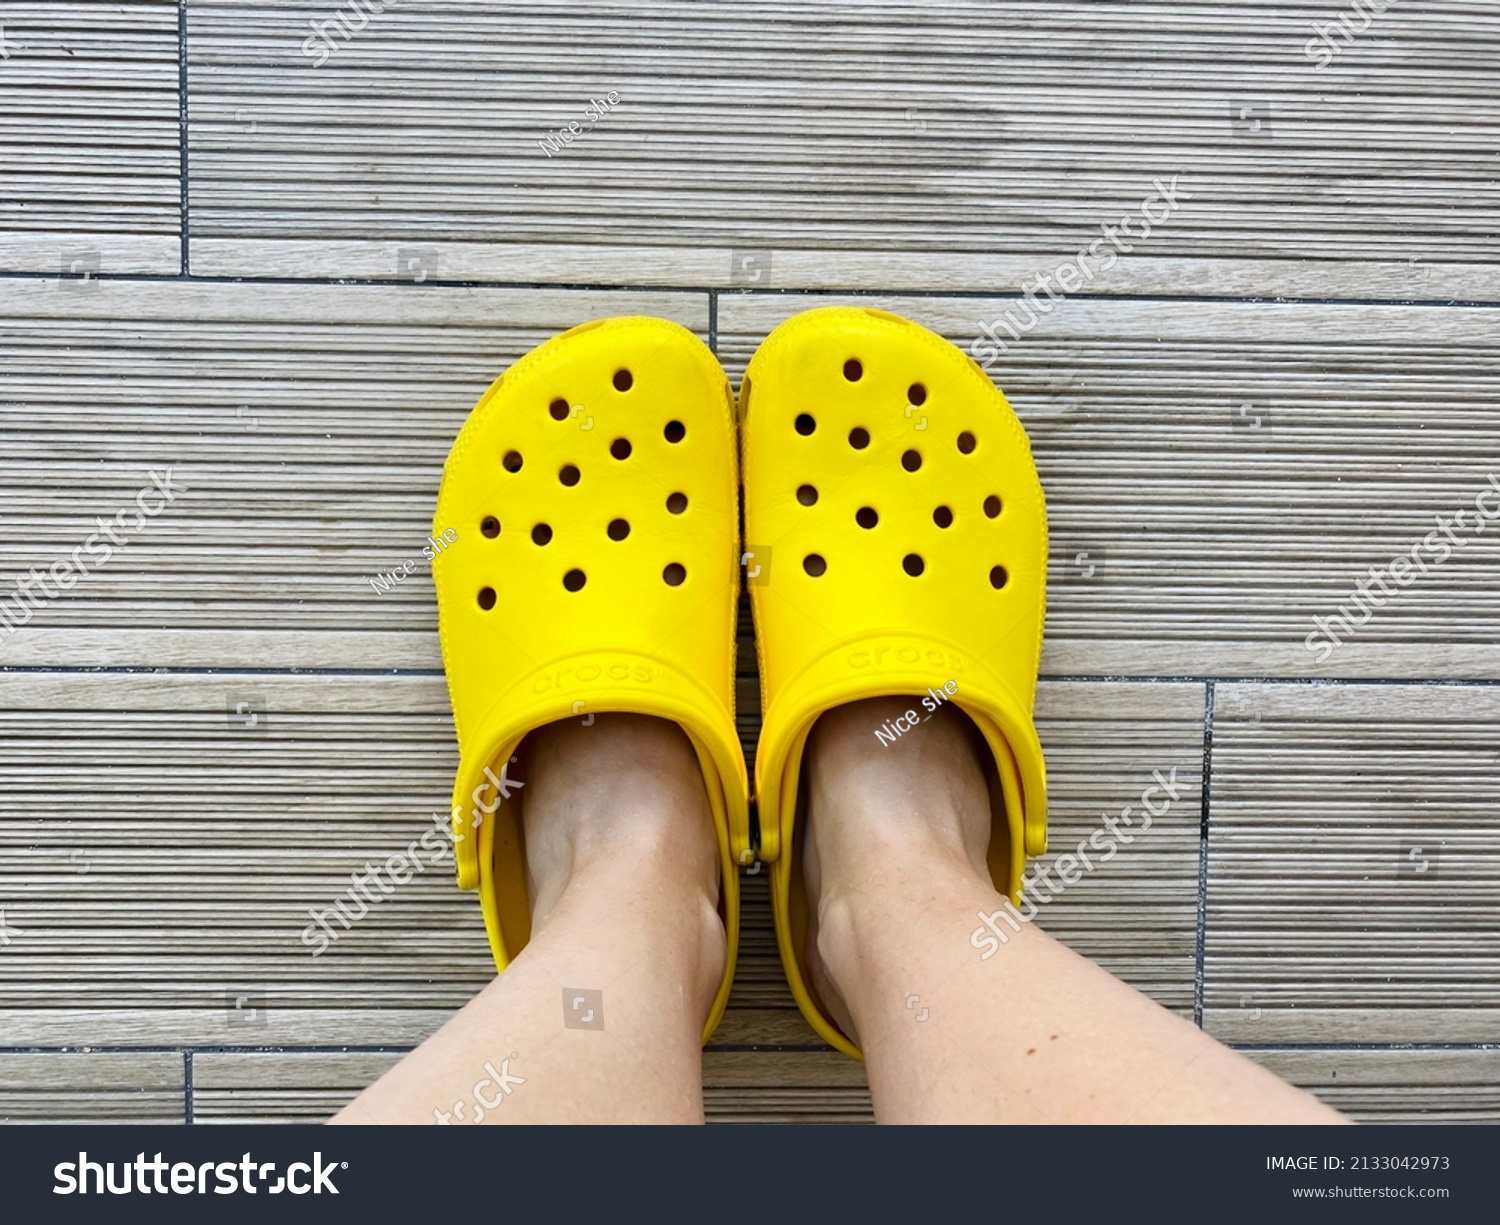 289 Crocs family Images, Stock Photos & Vectors | Shutterstock